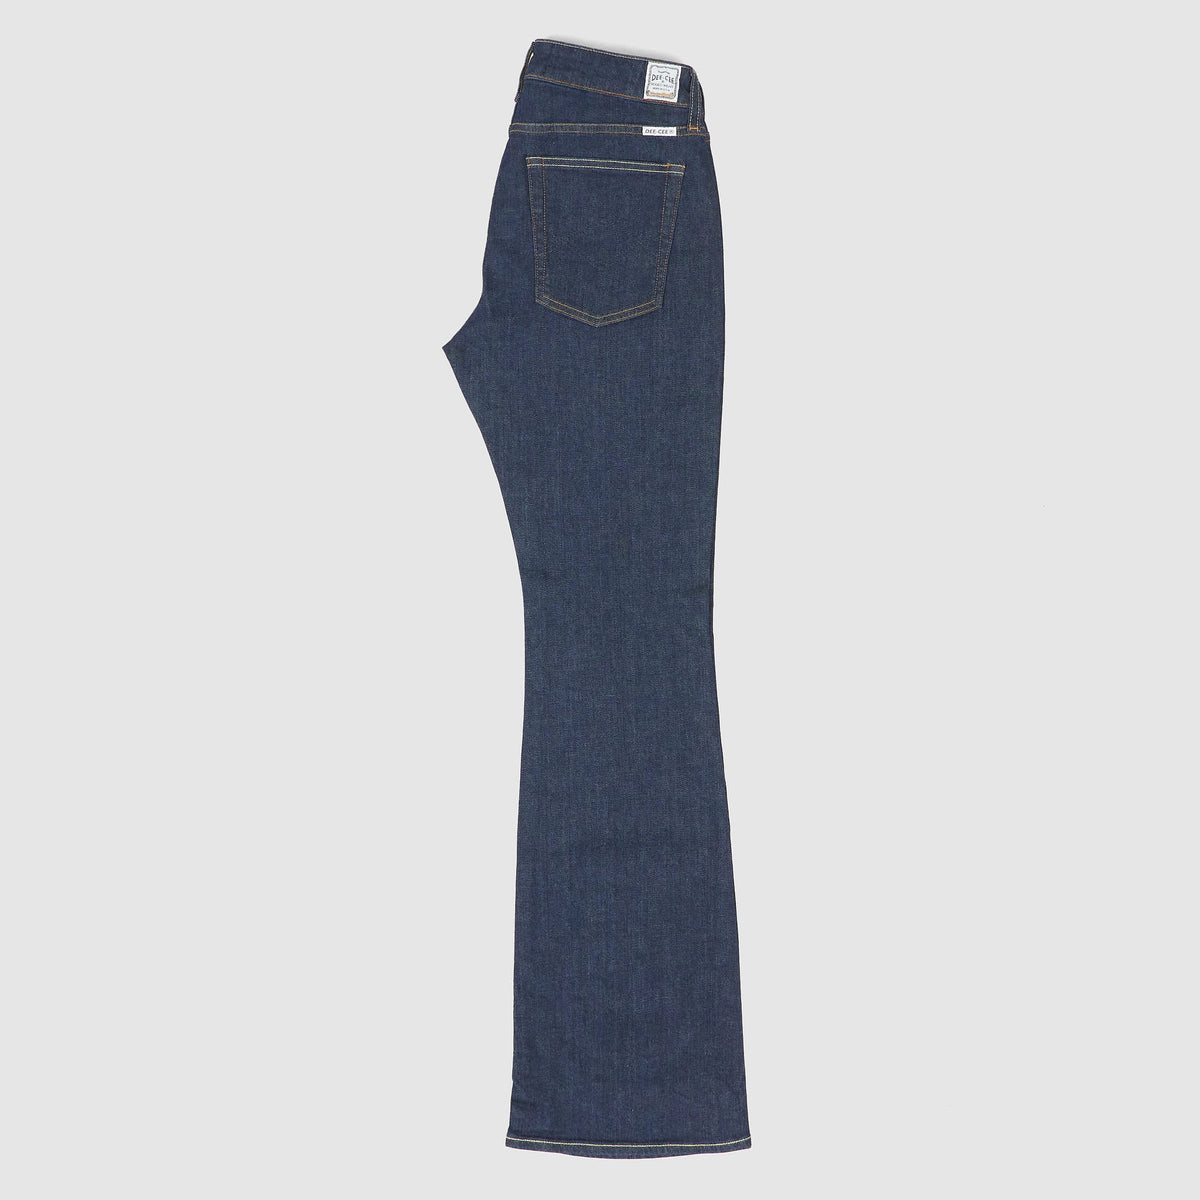 Washington Dee-Cee Ladies 5-Pocket Flared Boot Cut Jeans